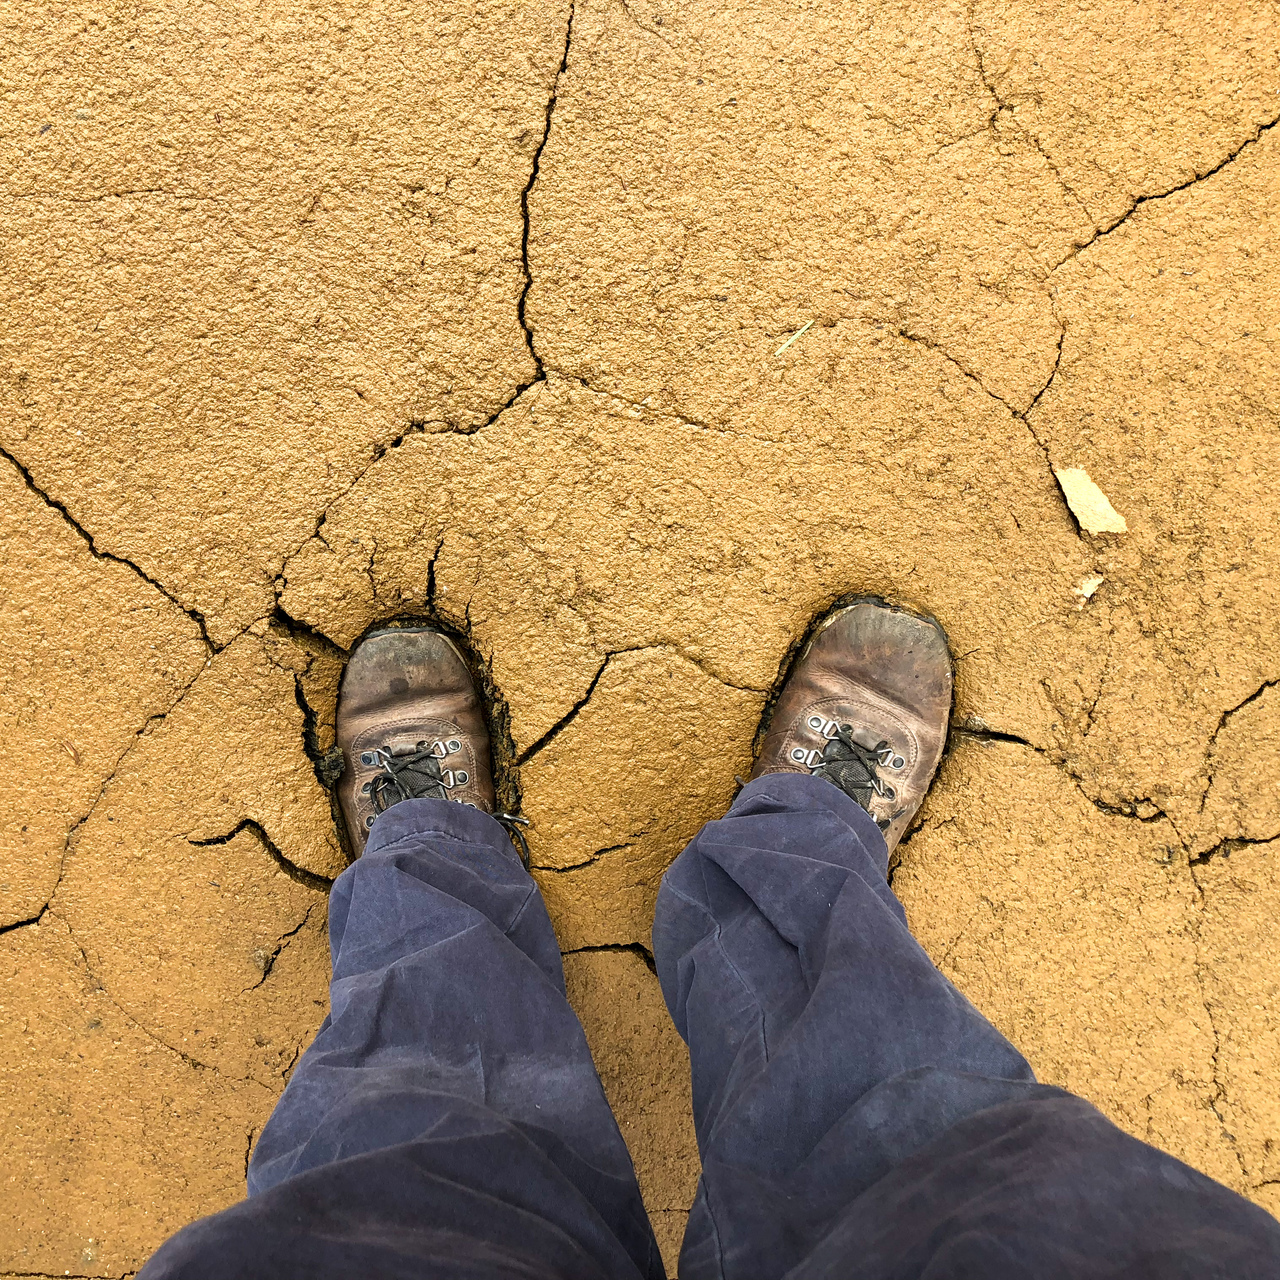 2018-herman-gulch - Feet sinking into the mud near the top. Herman Gulch, Colorado. September, 2018.